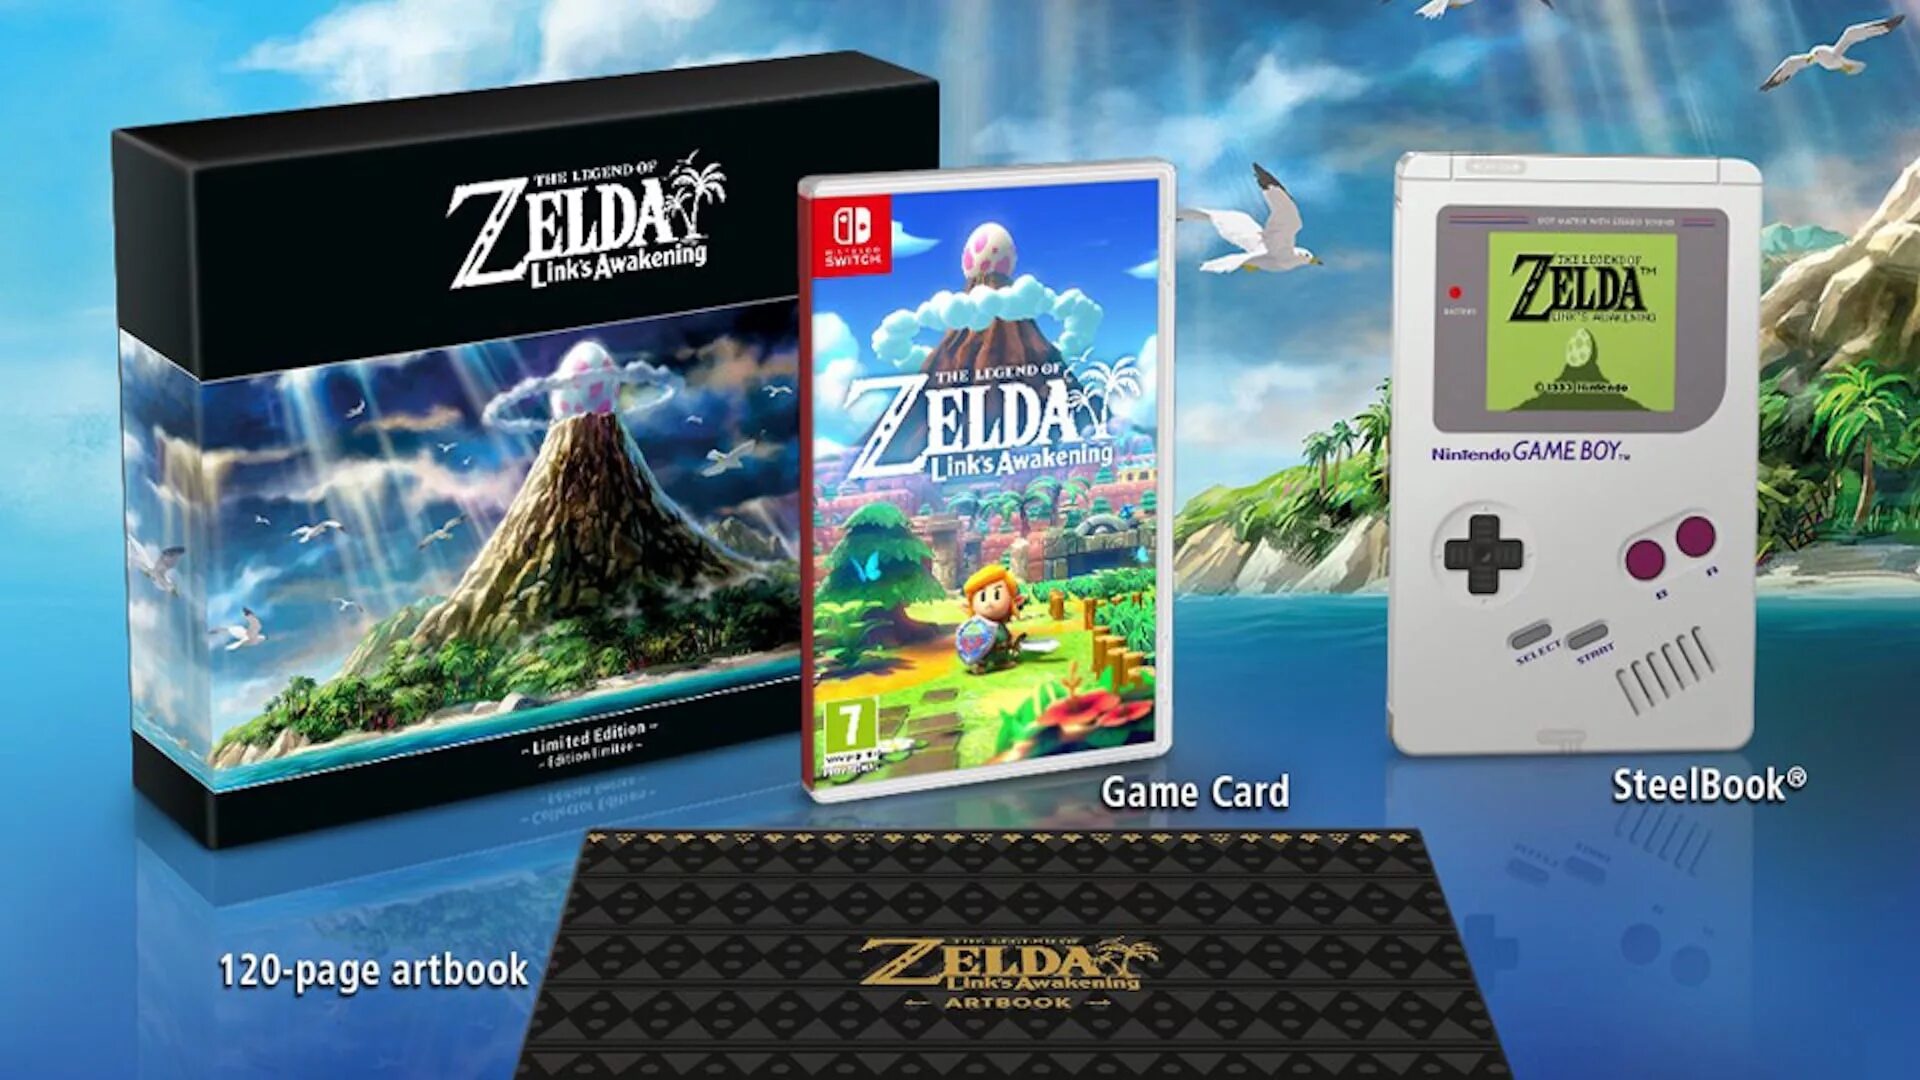 Legend of Zelda: link's Awakening Limited Edition. Zelda link's Awakening Nintendo Switch. Зельда игра на Нинтендо. The Legend of Zelda коллекционное издание. Nintendo link